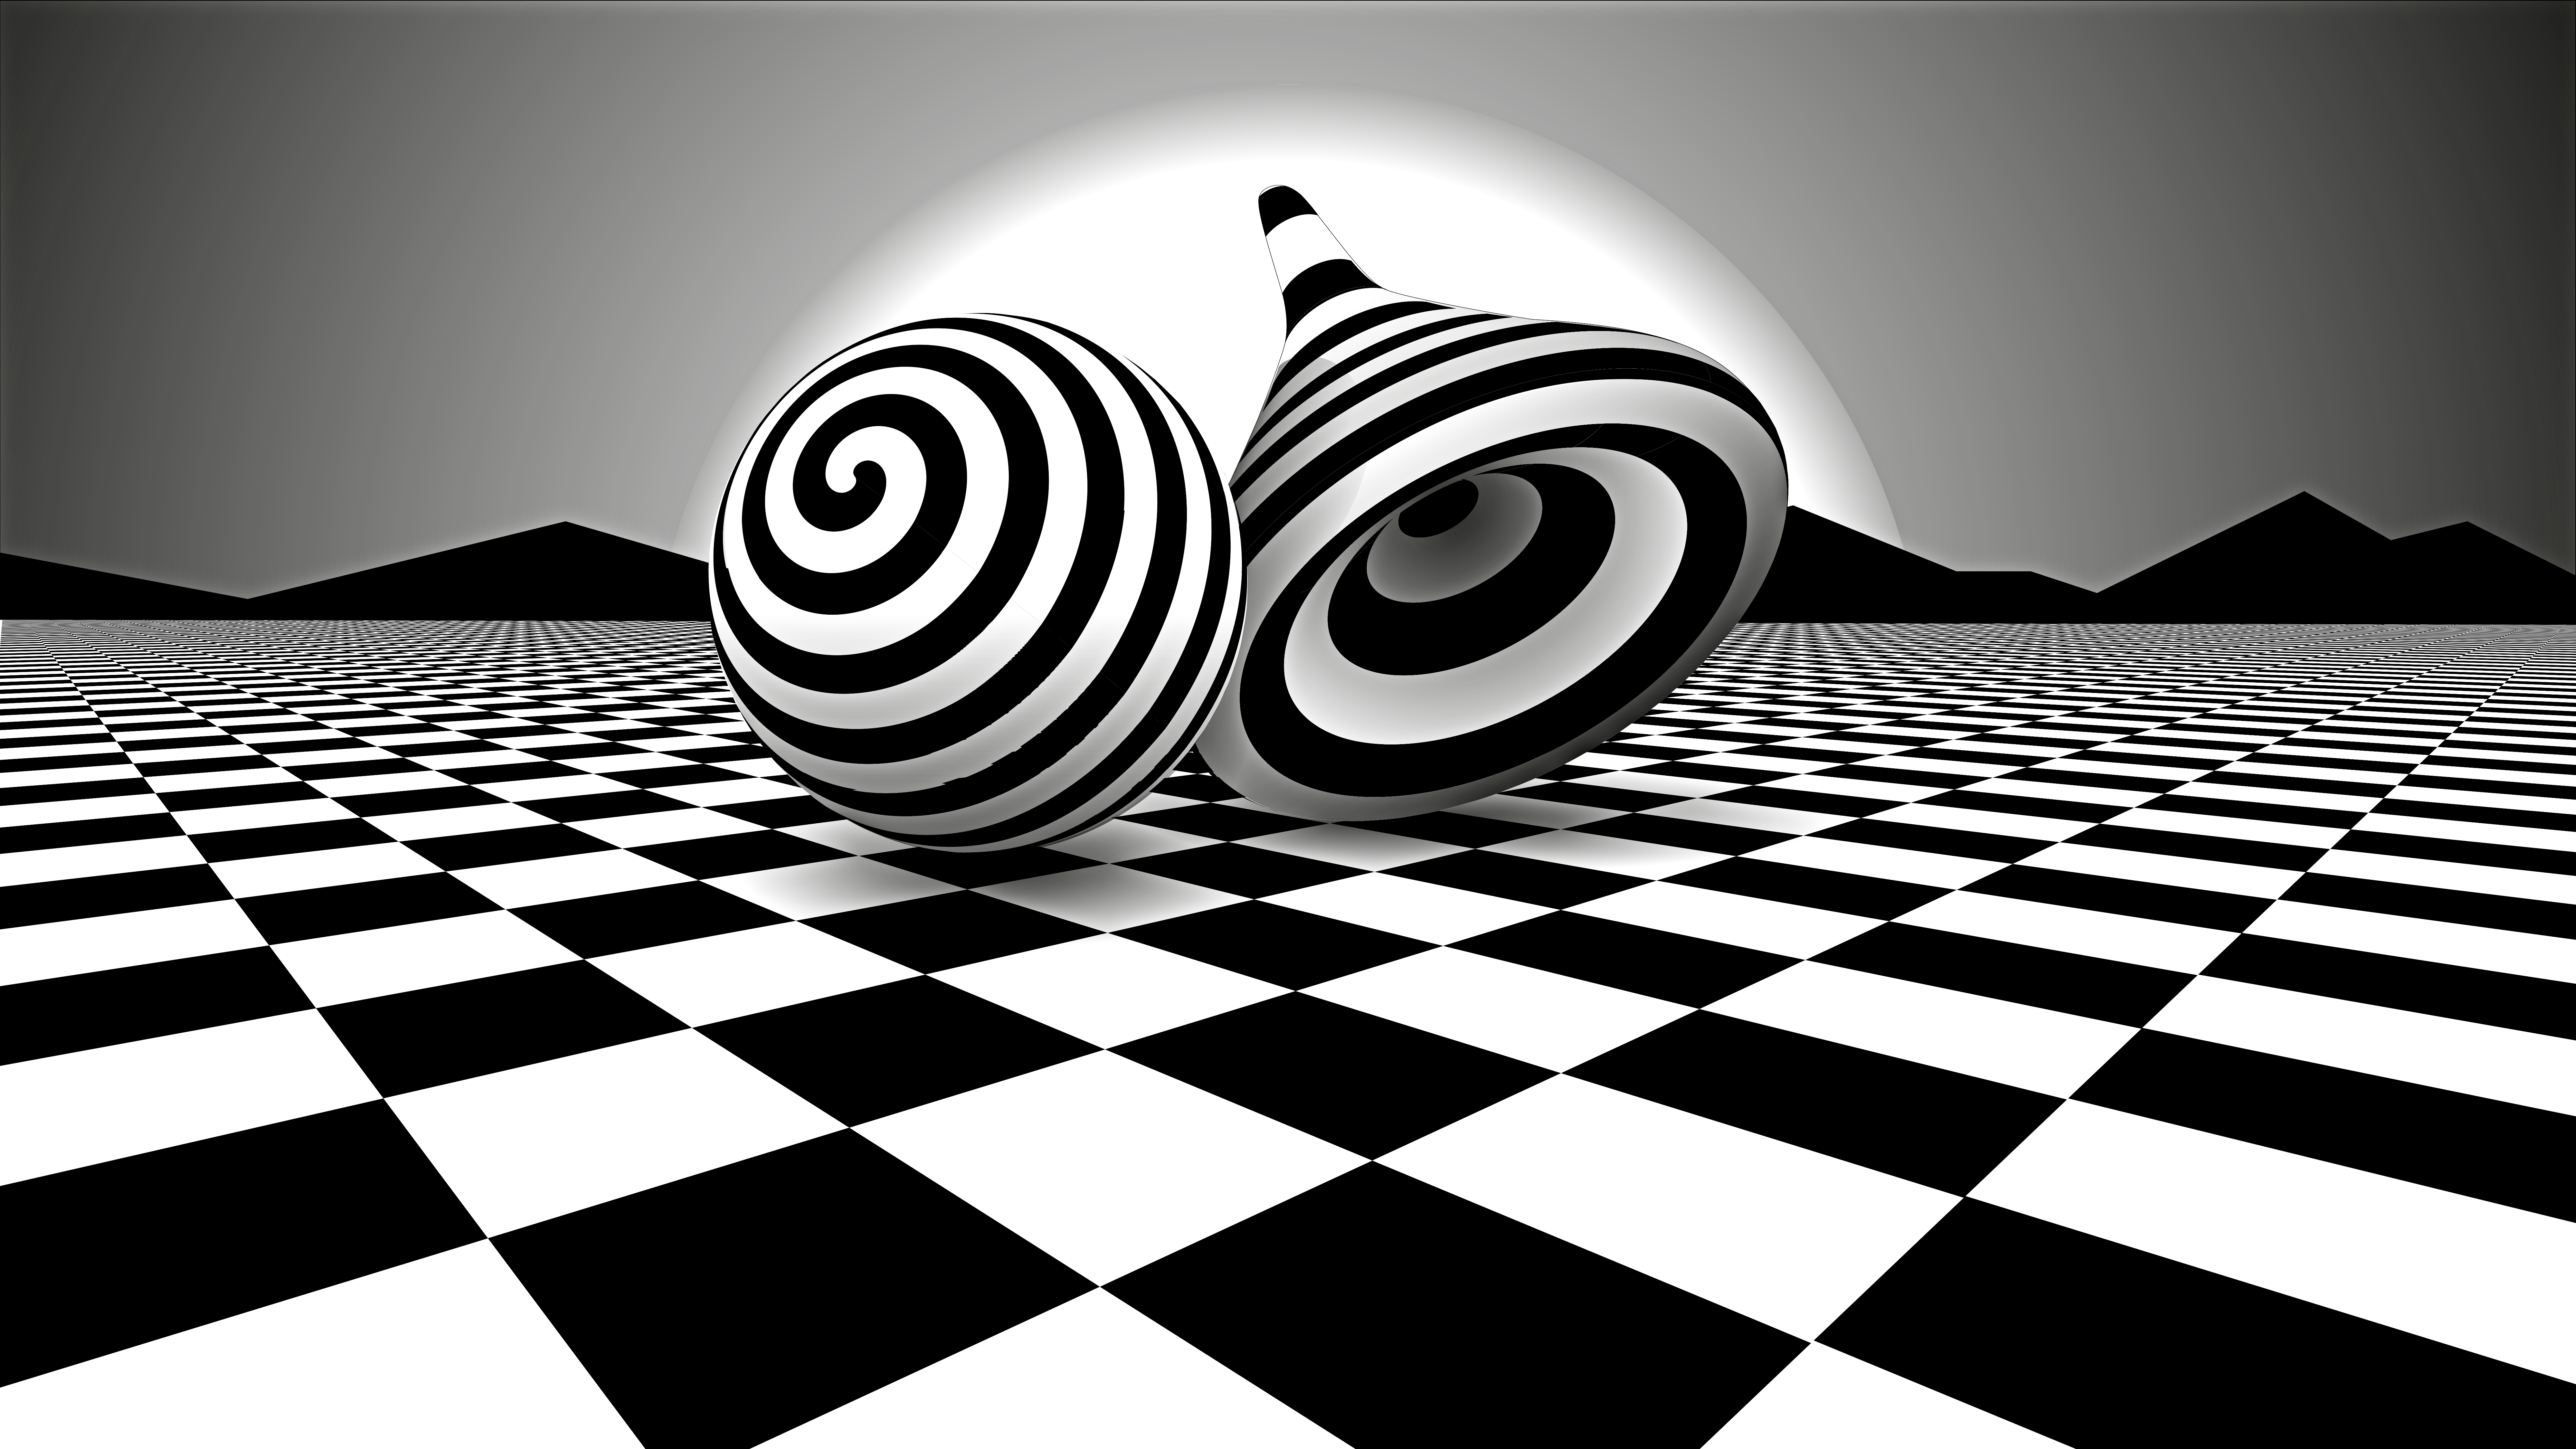 General 8000x4500 optical illusion optical art black white abstract checkered digital art